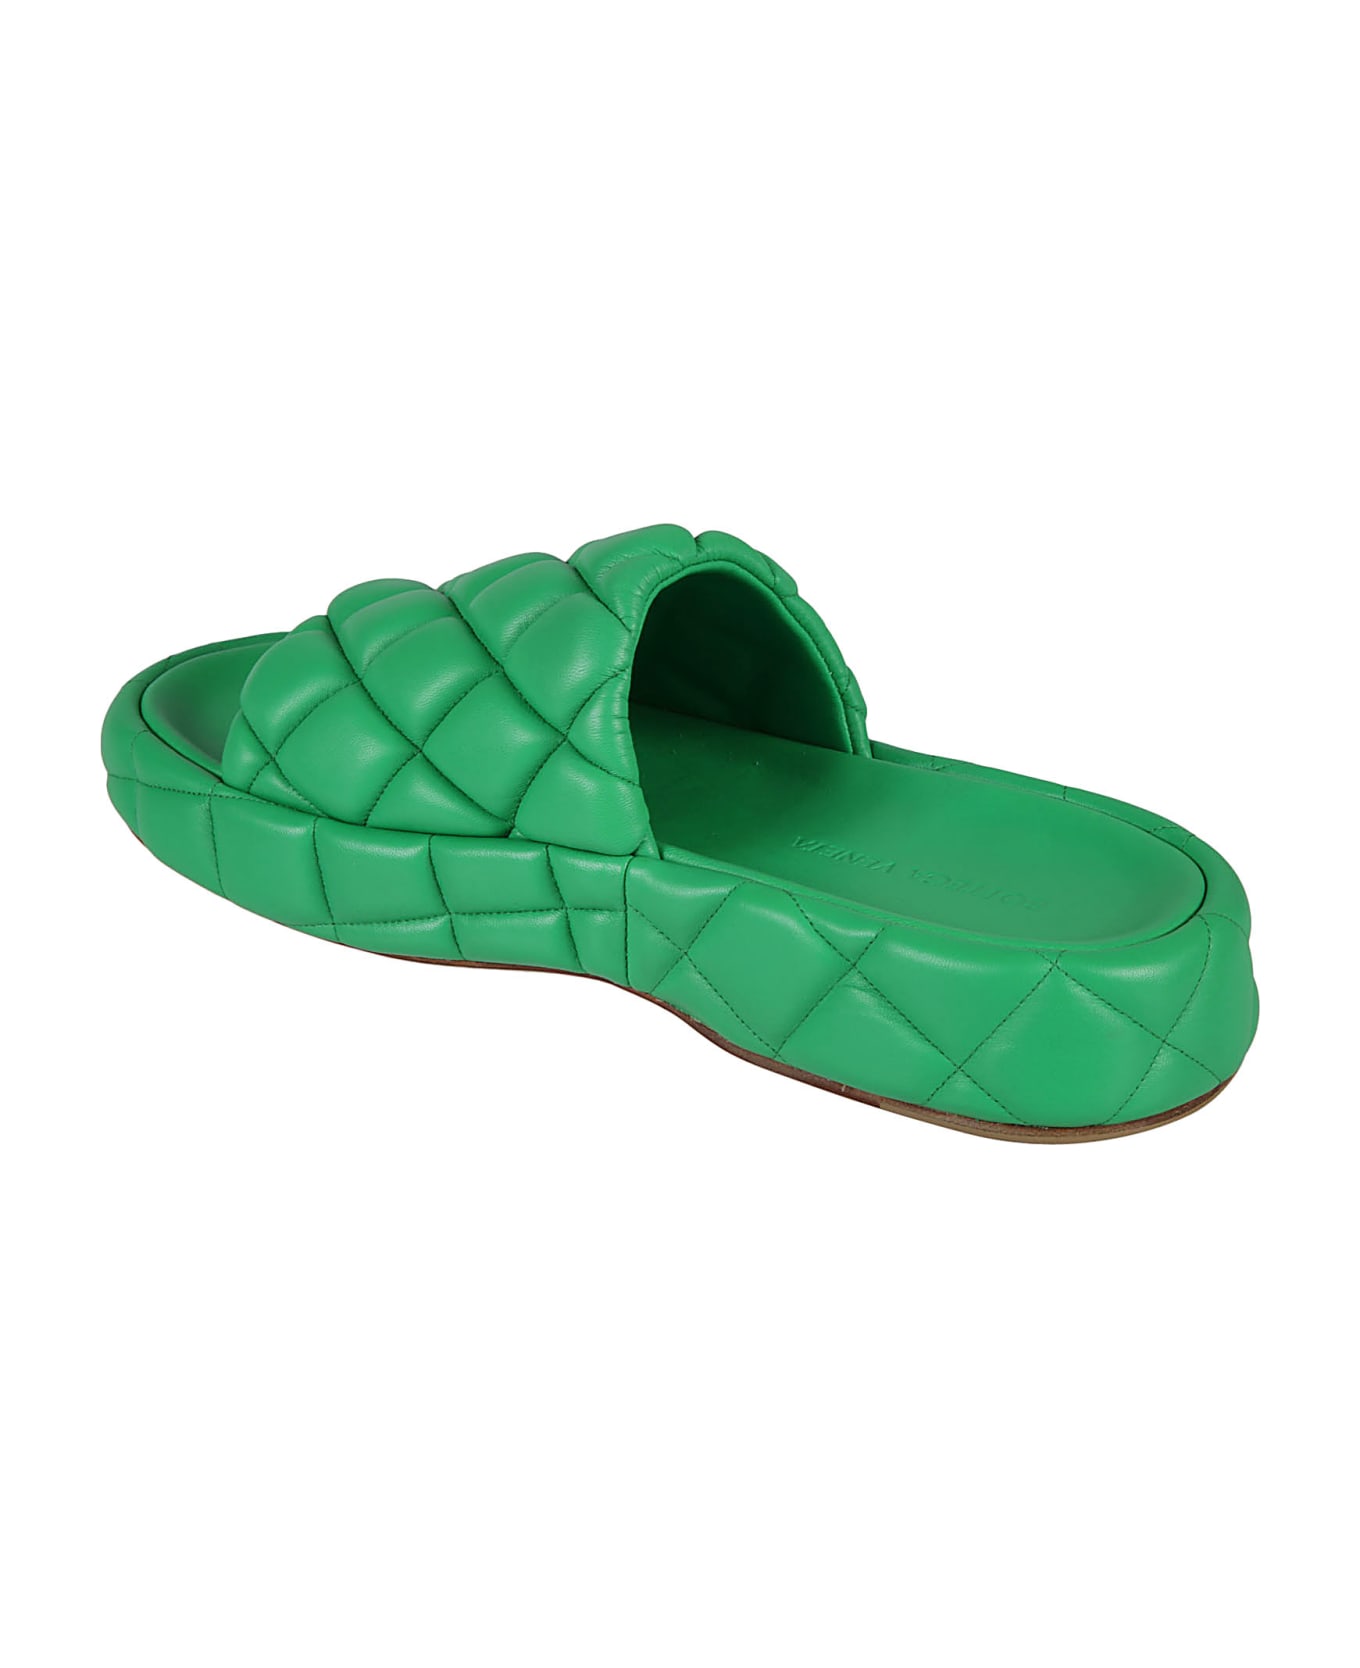 Bottega Veneta Padded Sandals - PARAKEET